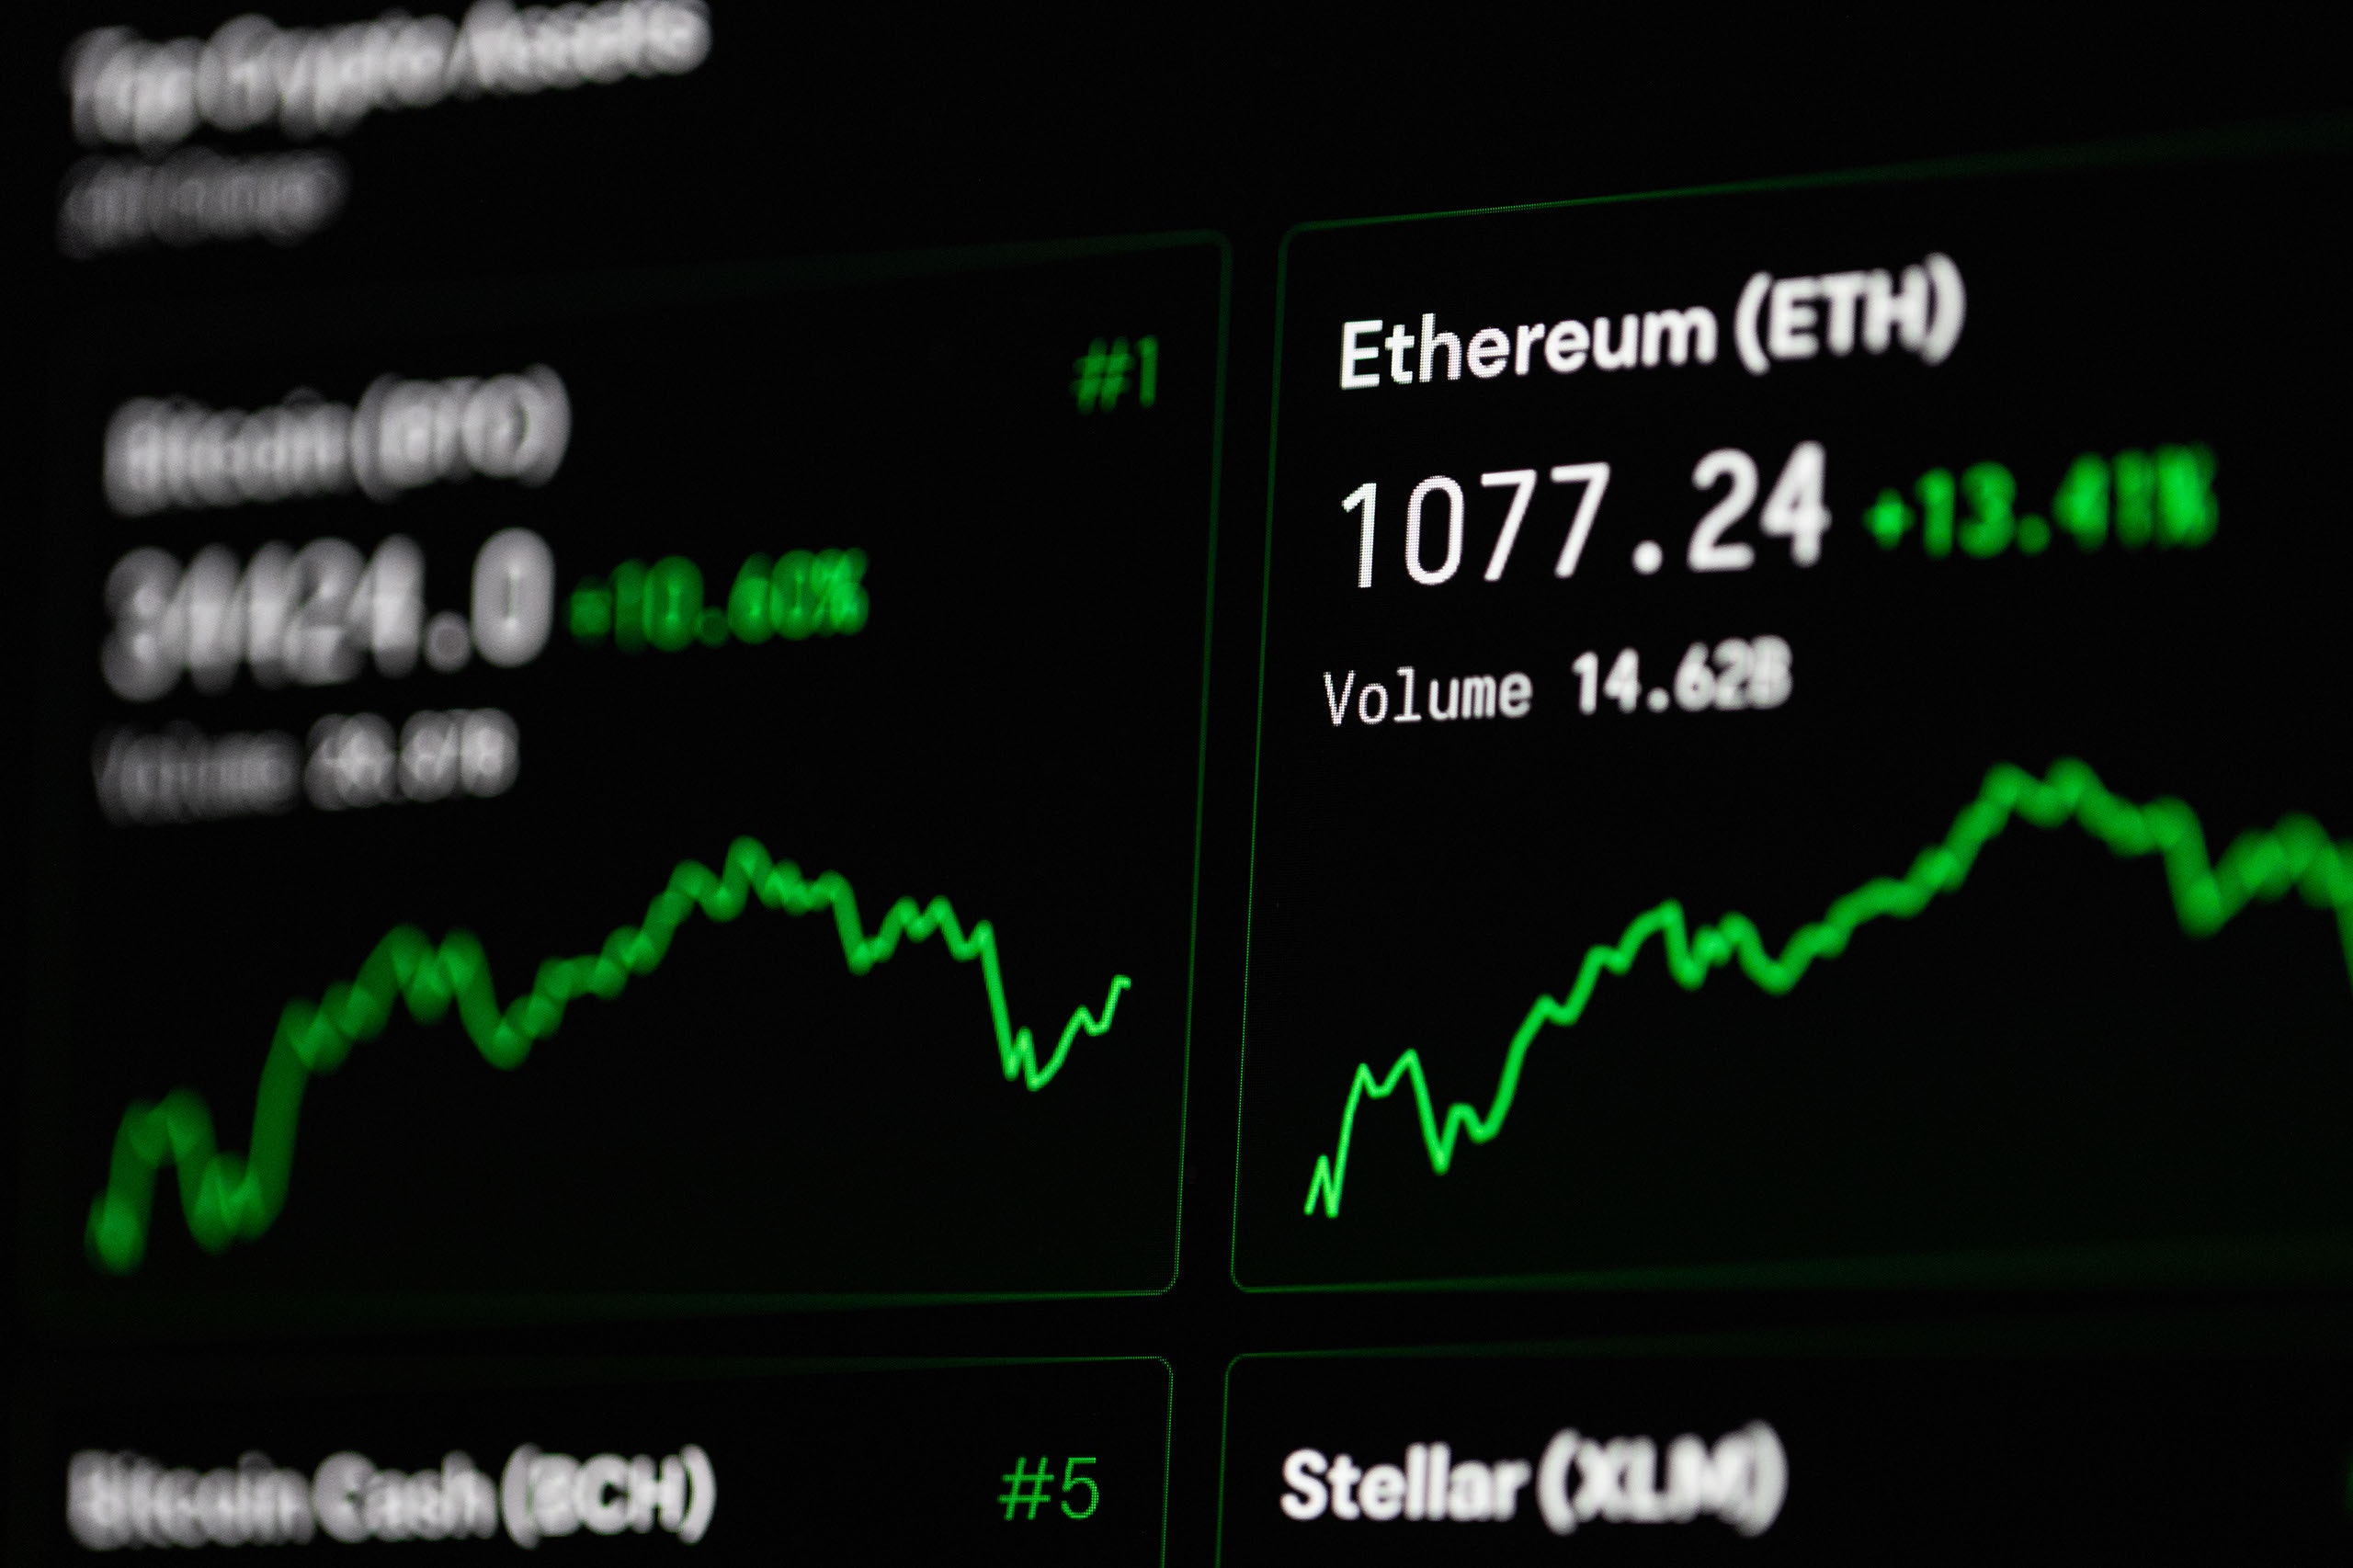 Canada buy ethereum биткоин график за 5 лет цена